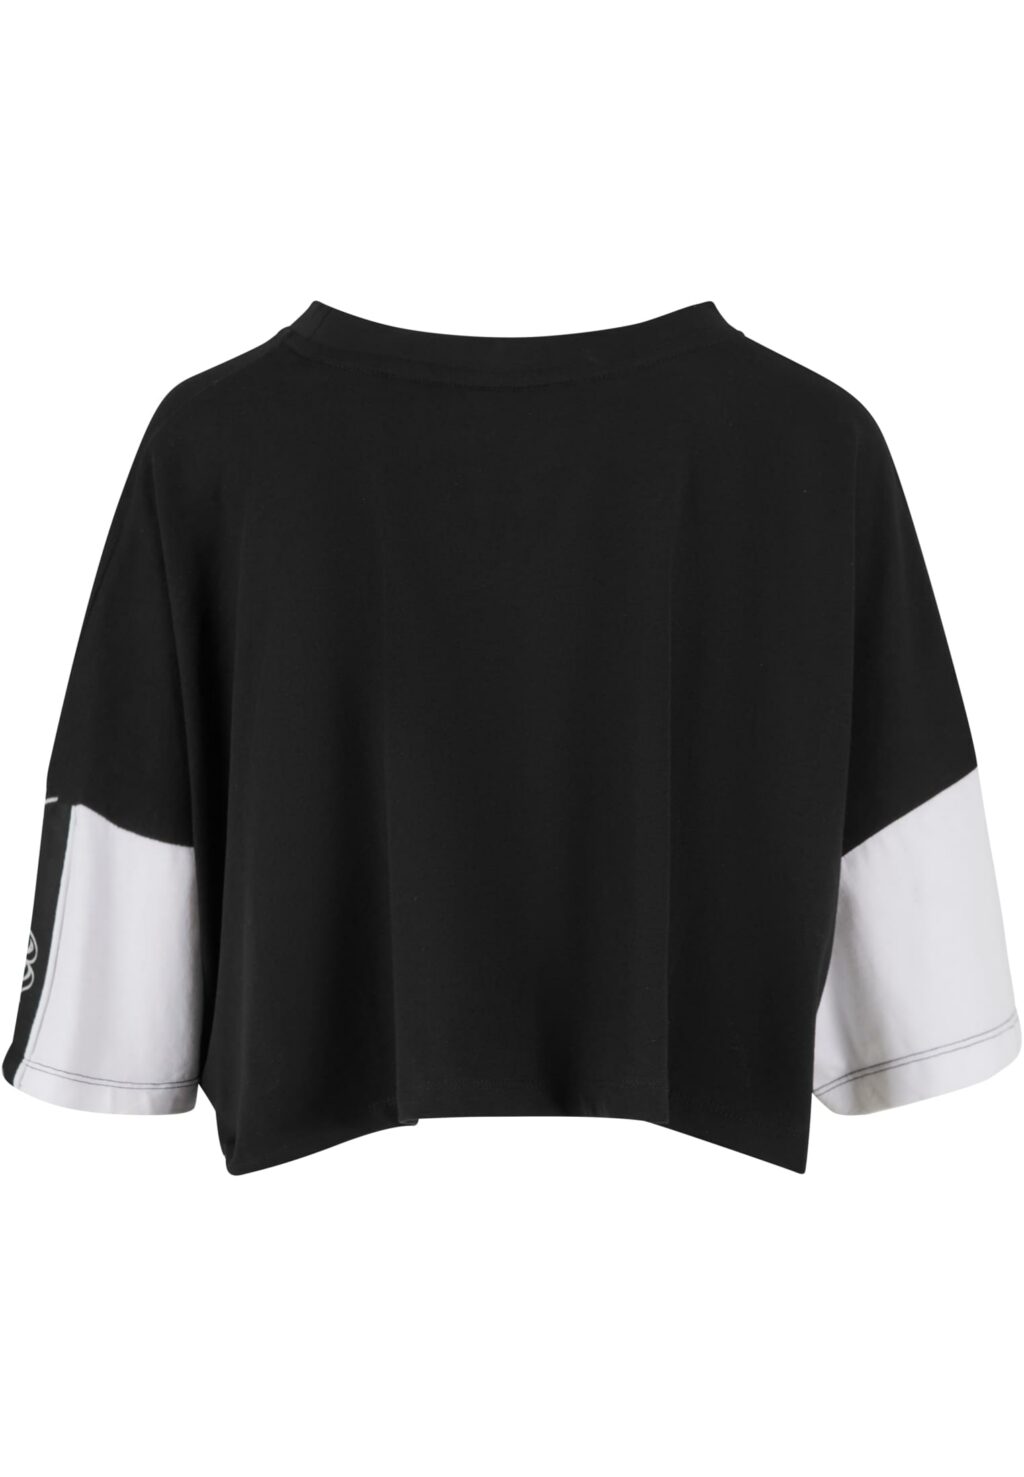 Rocawear Resolution T-Shirt black RWLTS002